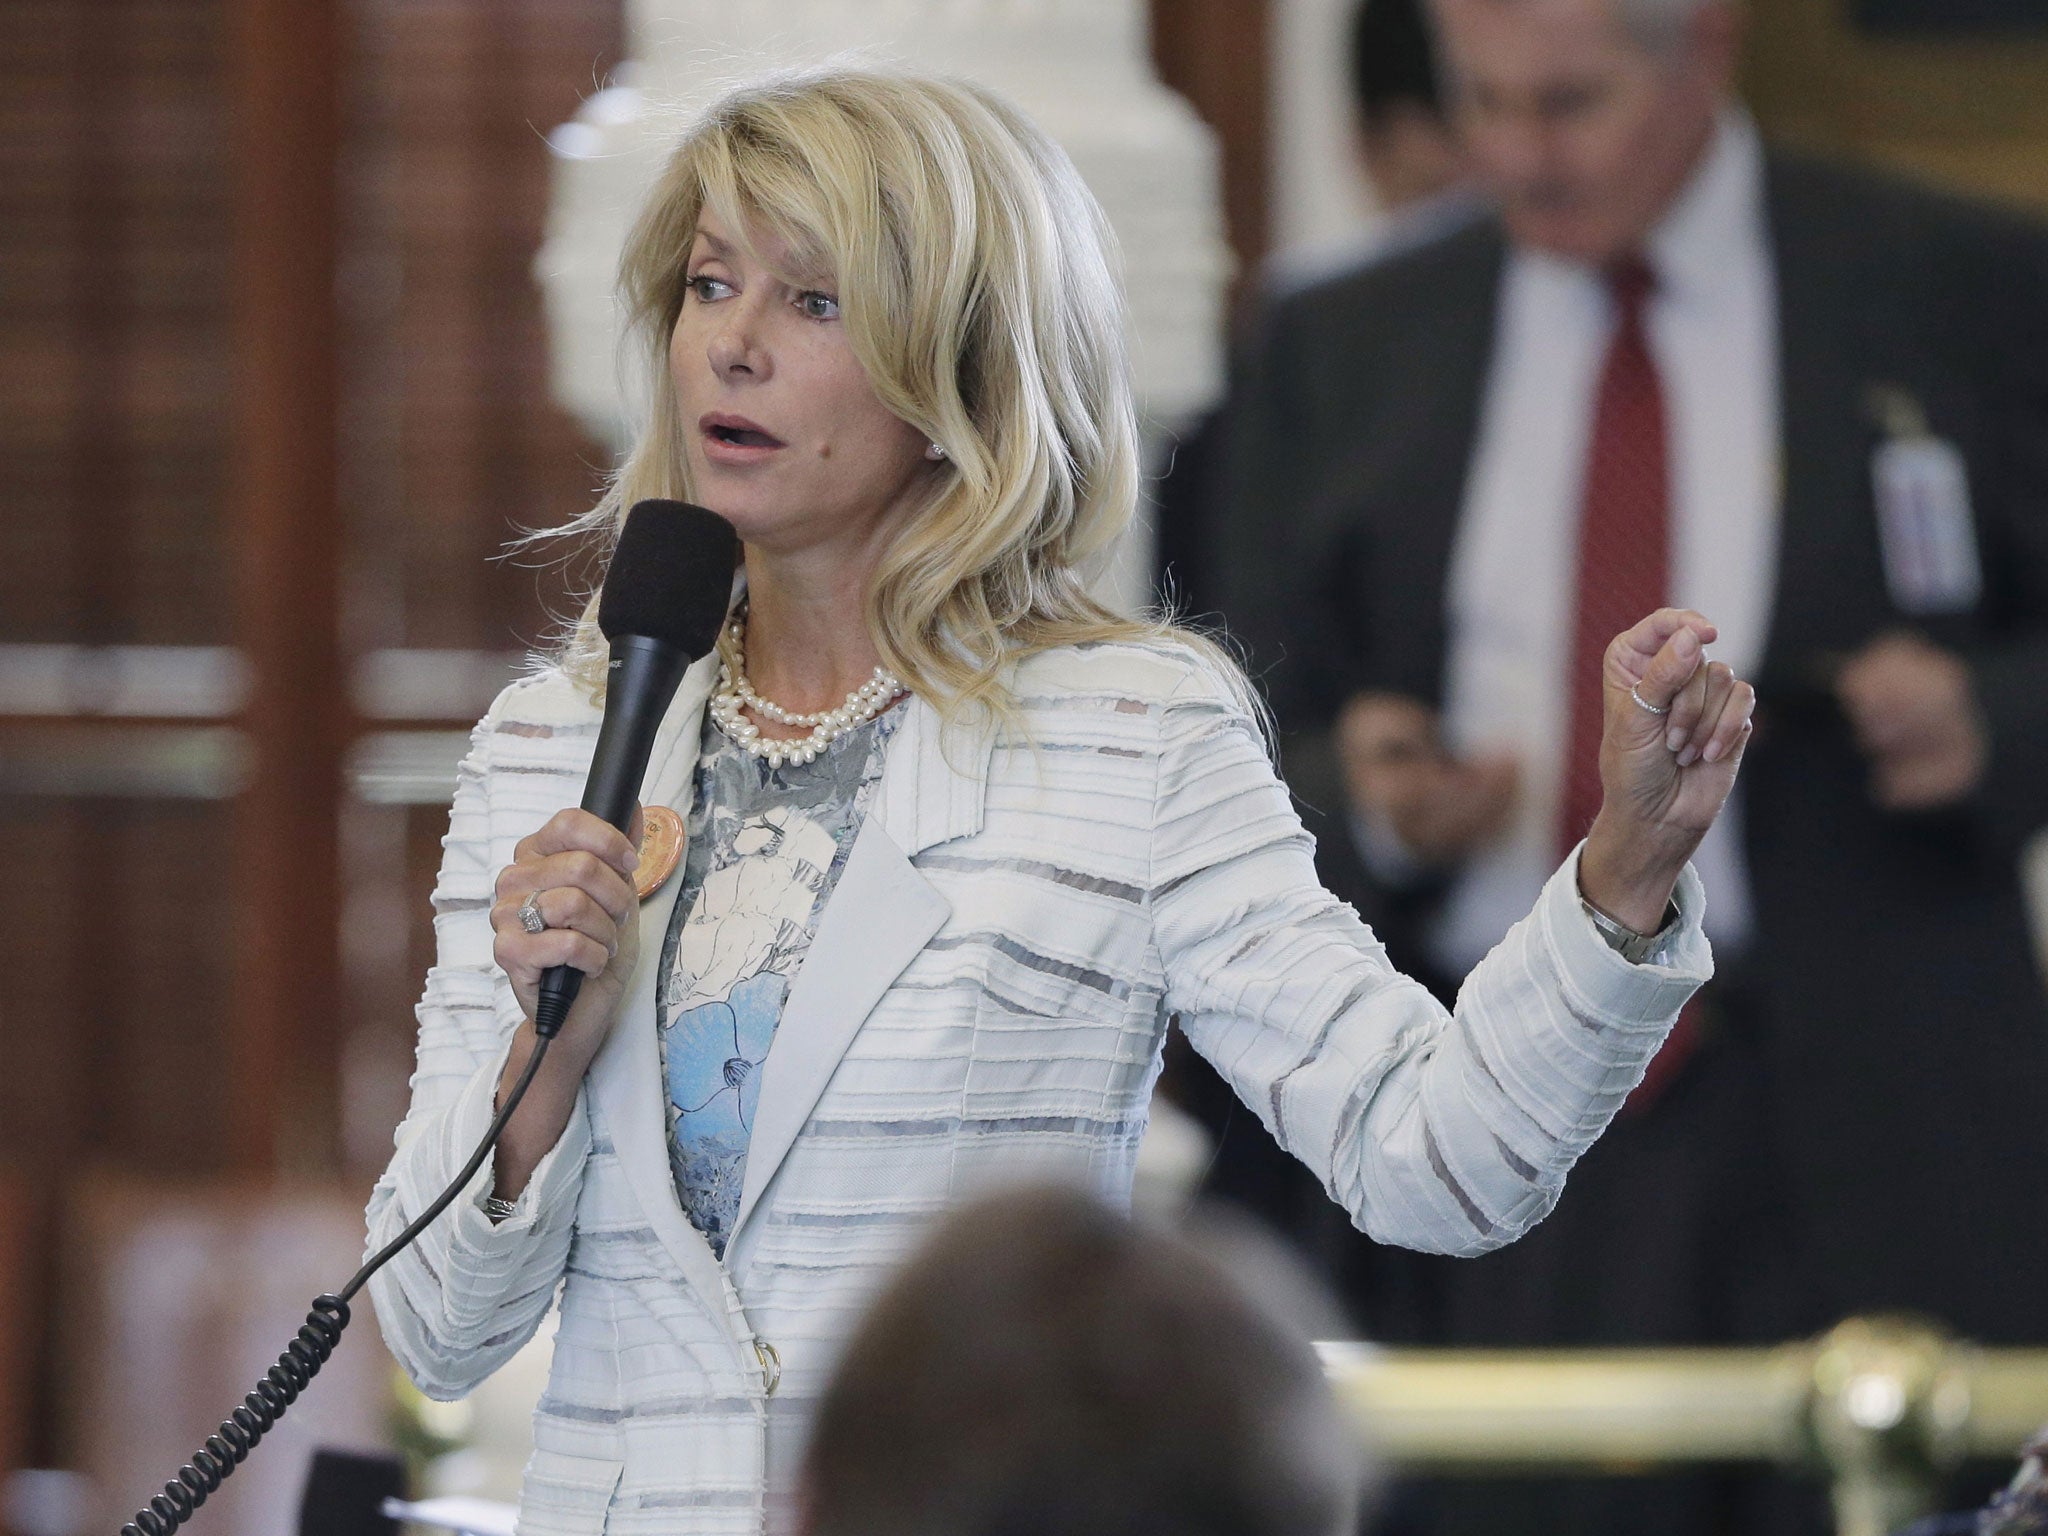 Two weeks after Democrat State Senator Wendy Davis's filibuster, her opponents have regrouped